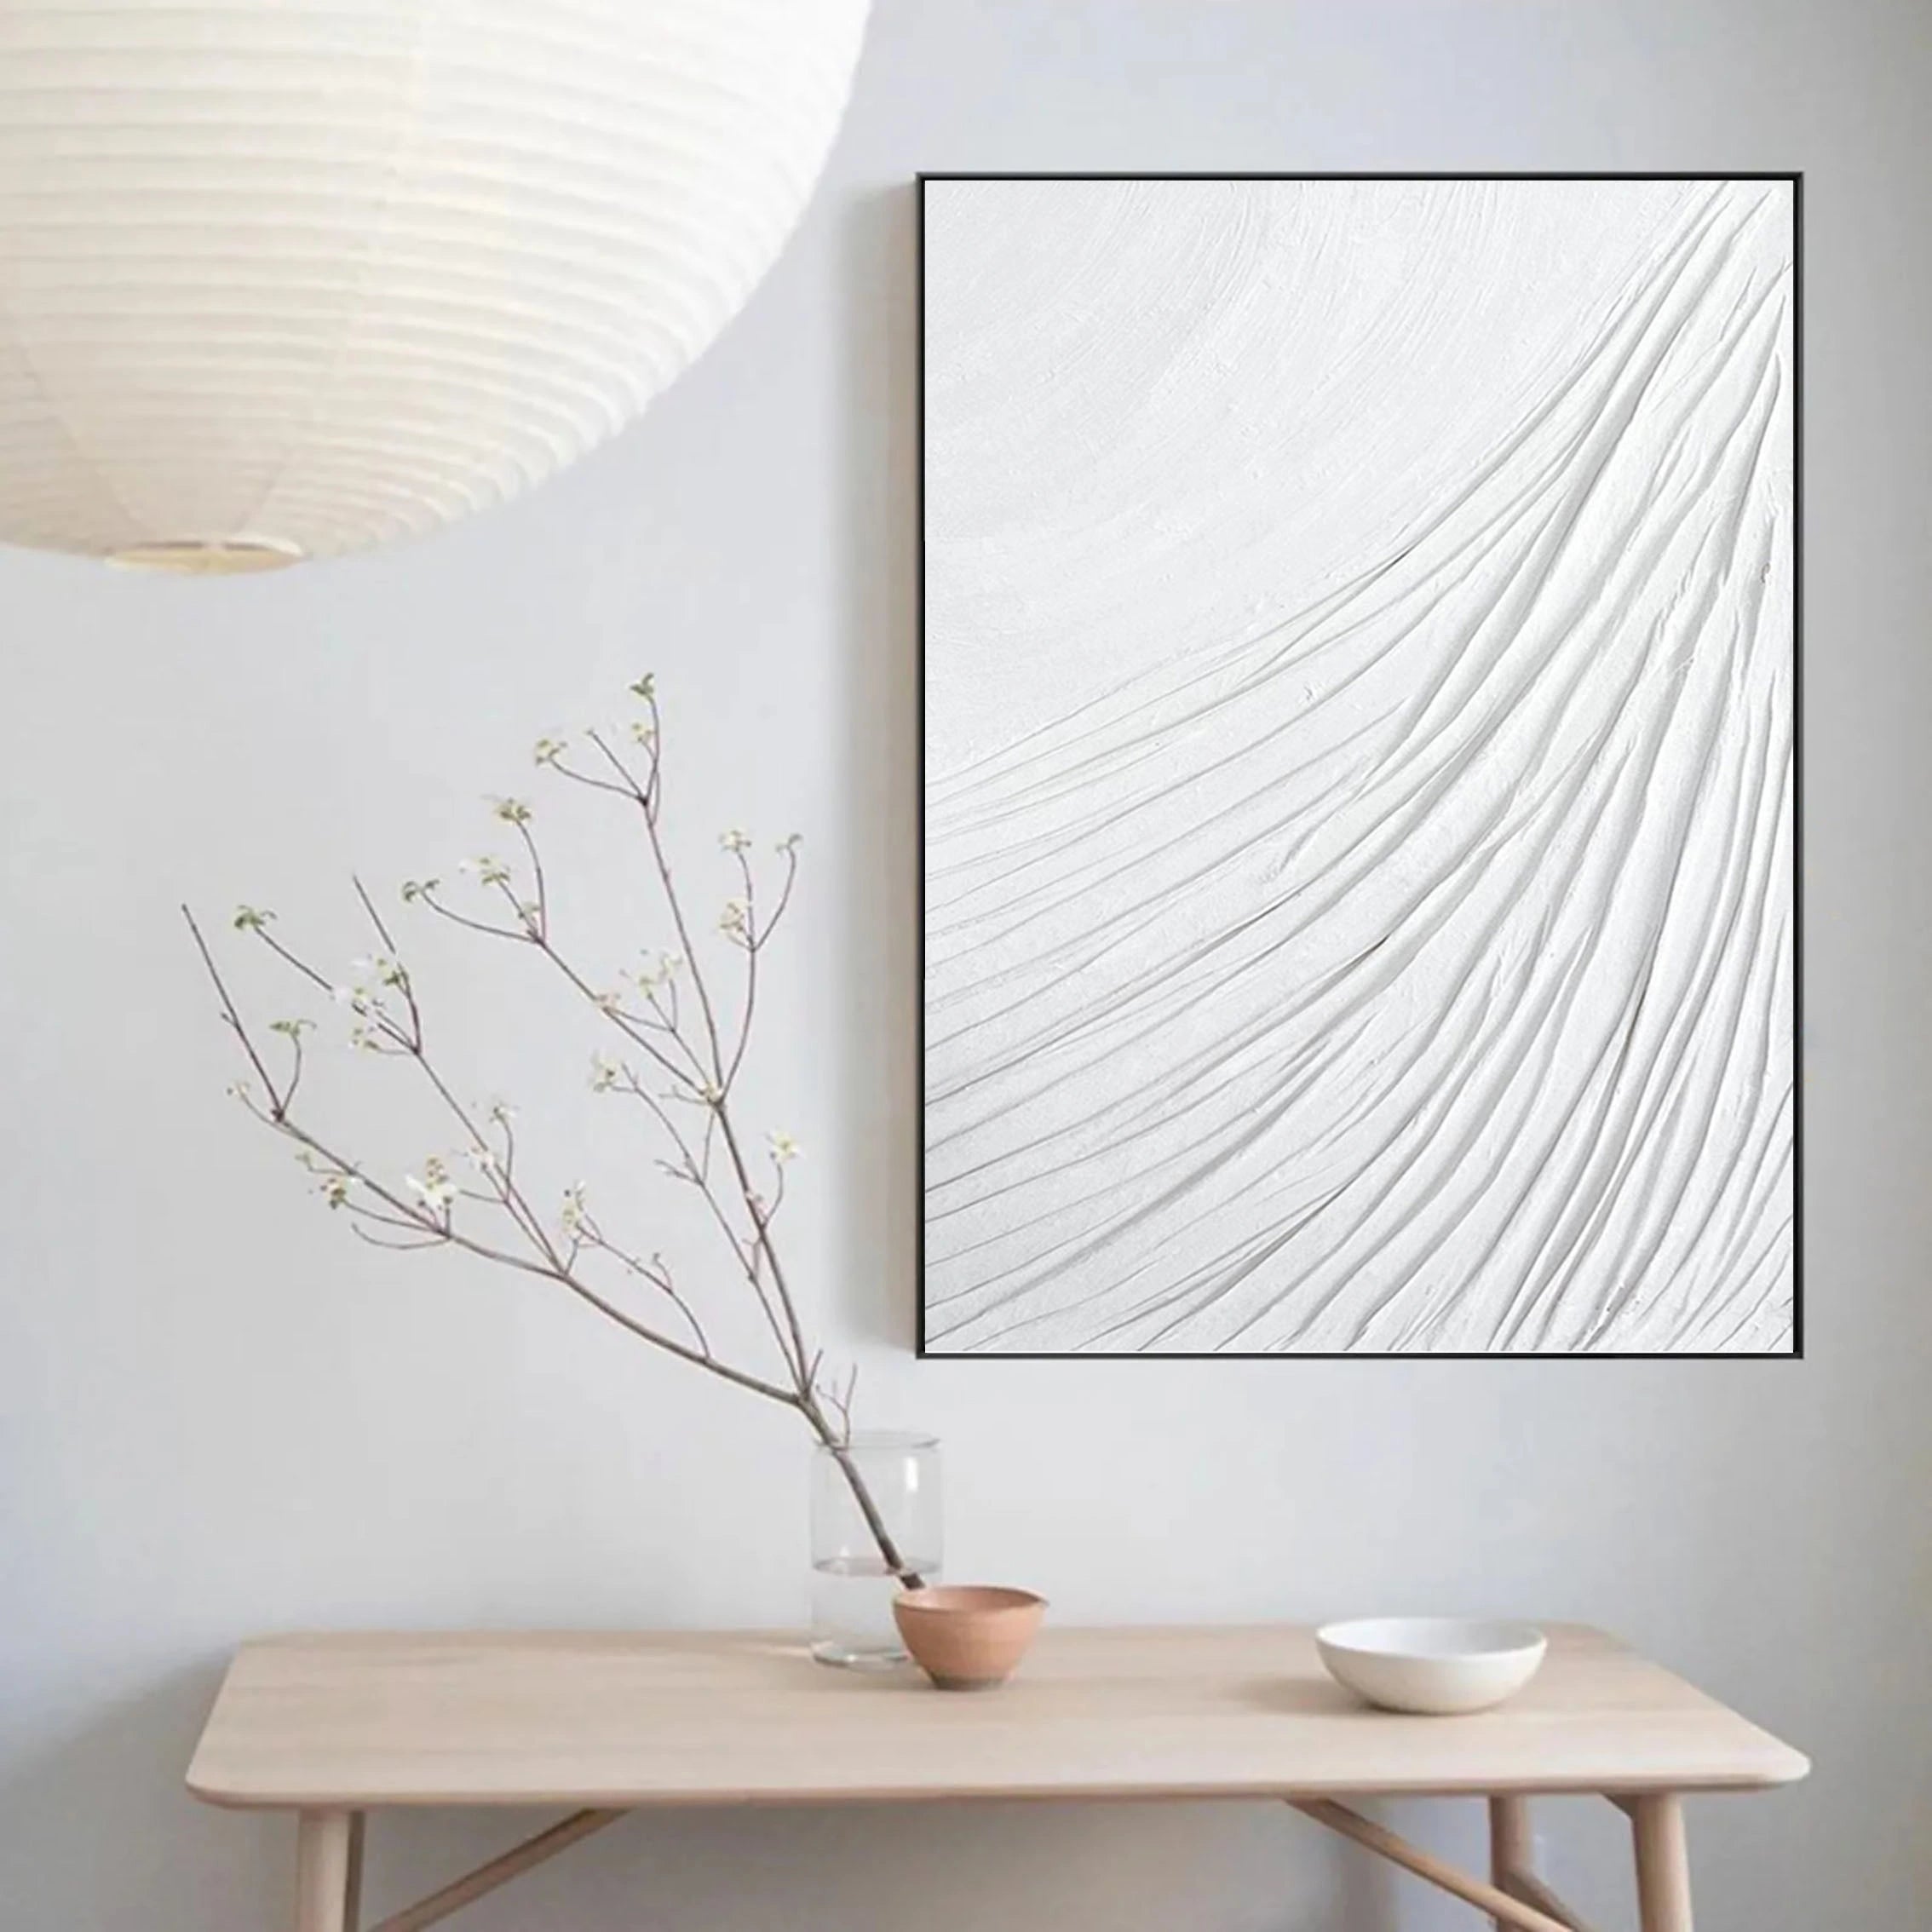 White 3D Textured Plaster Art Large Painting on Canvas Minimalistic Balance